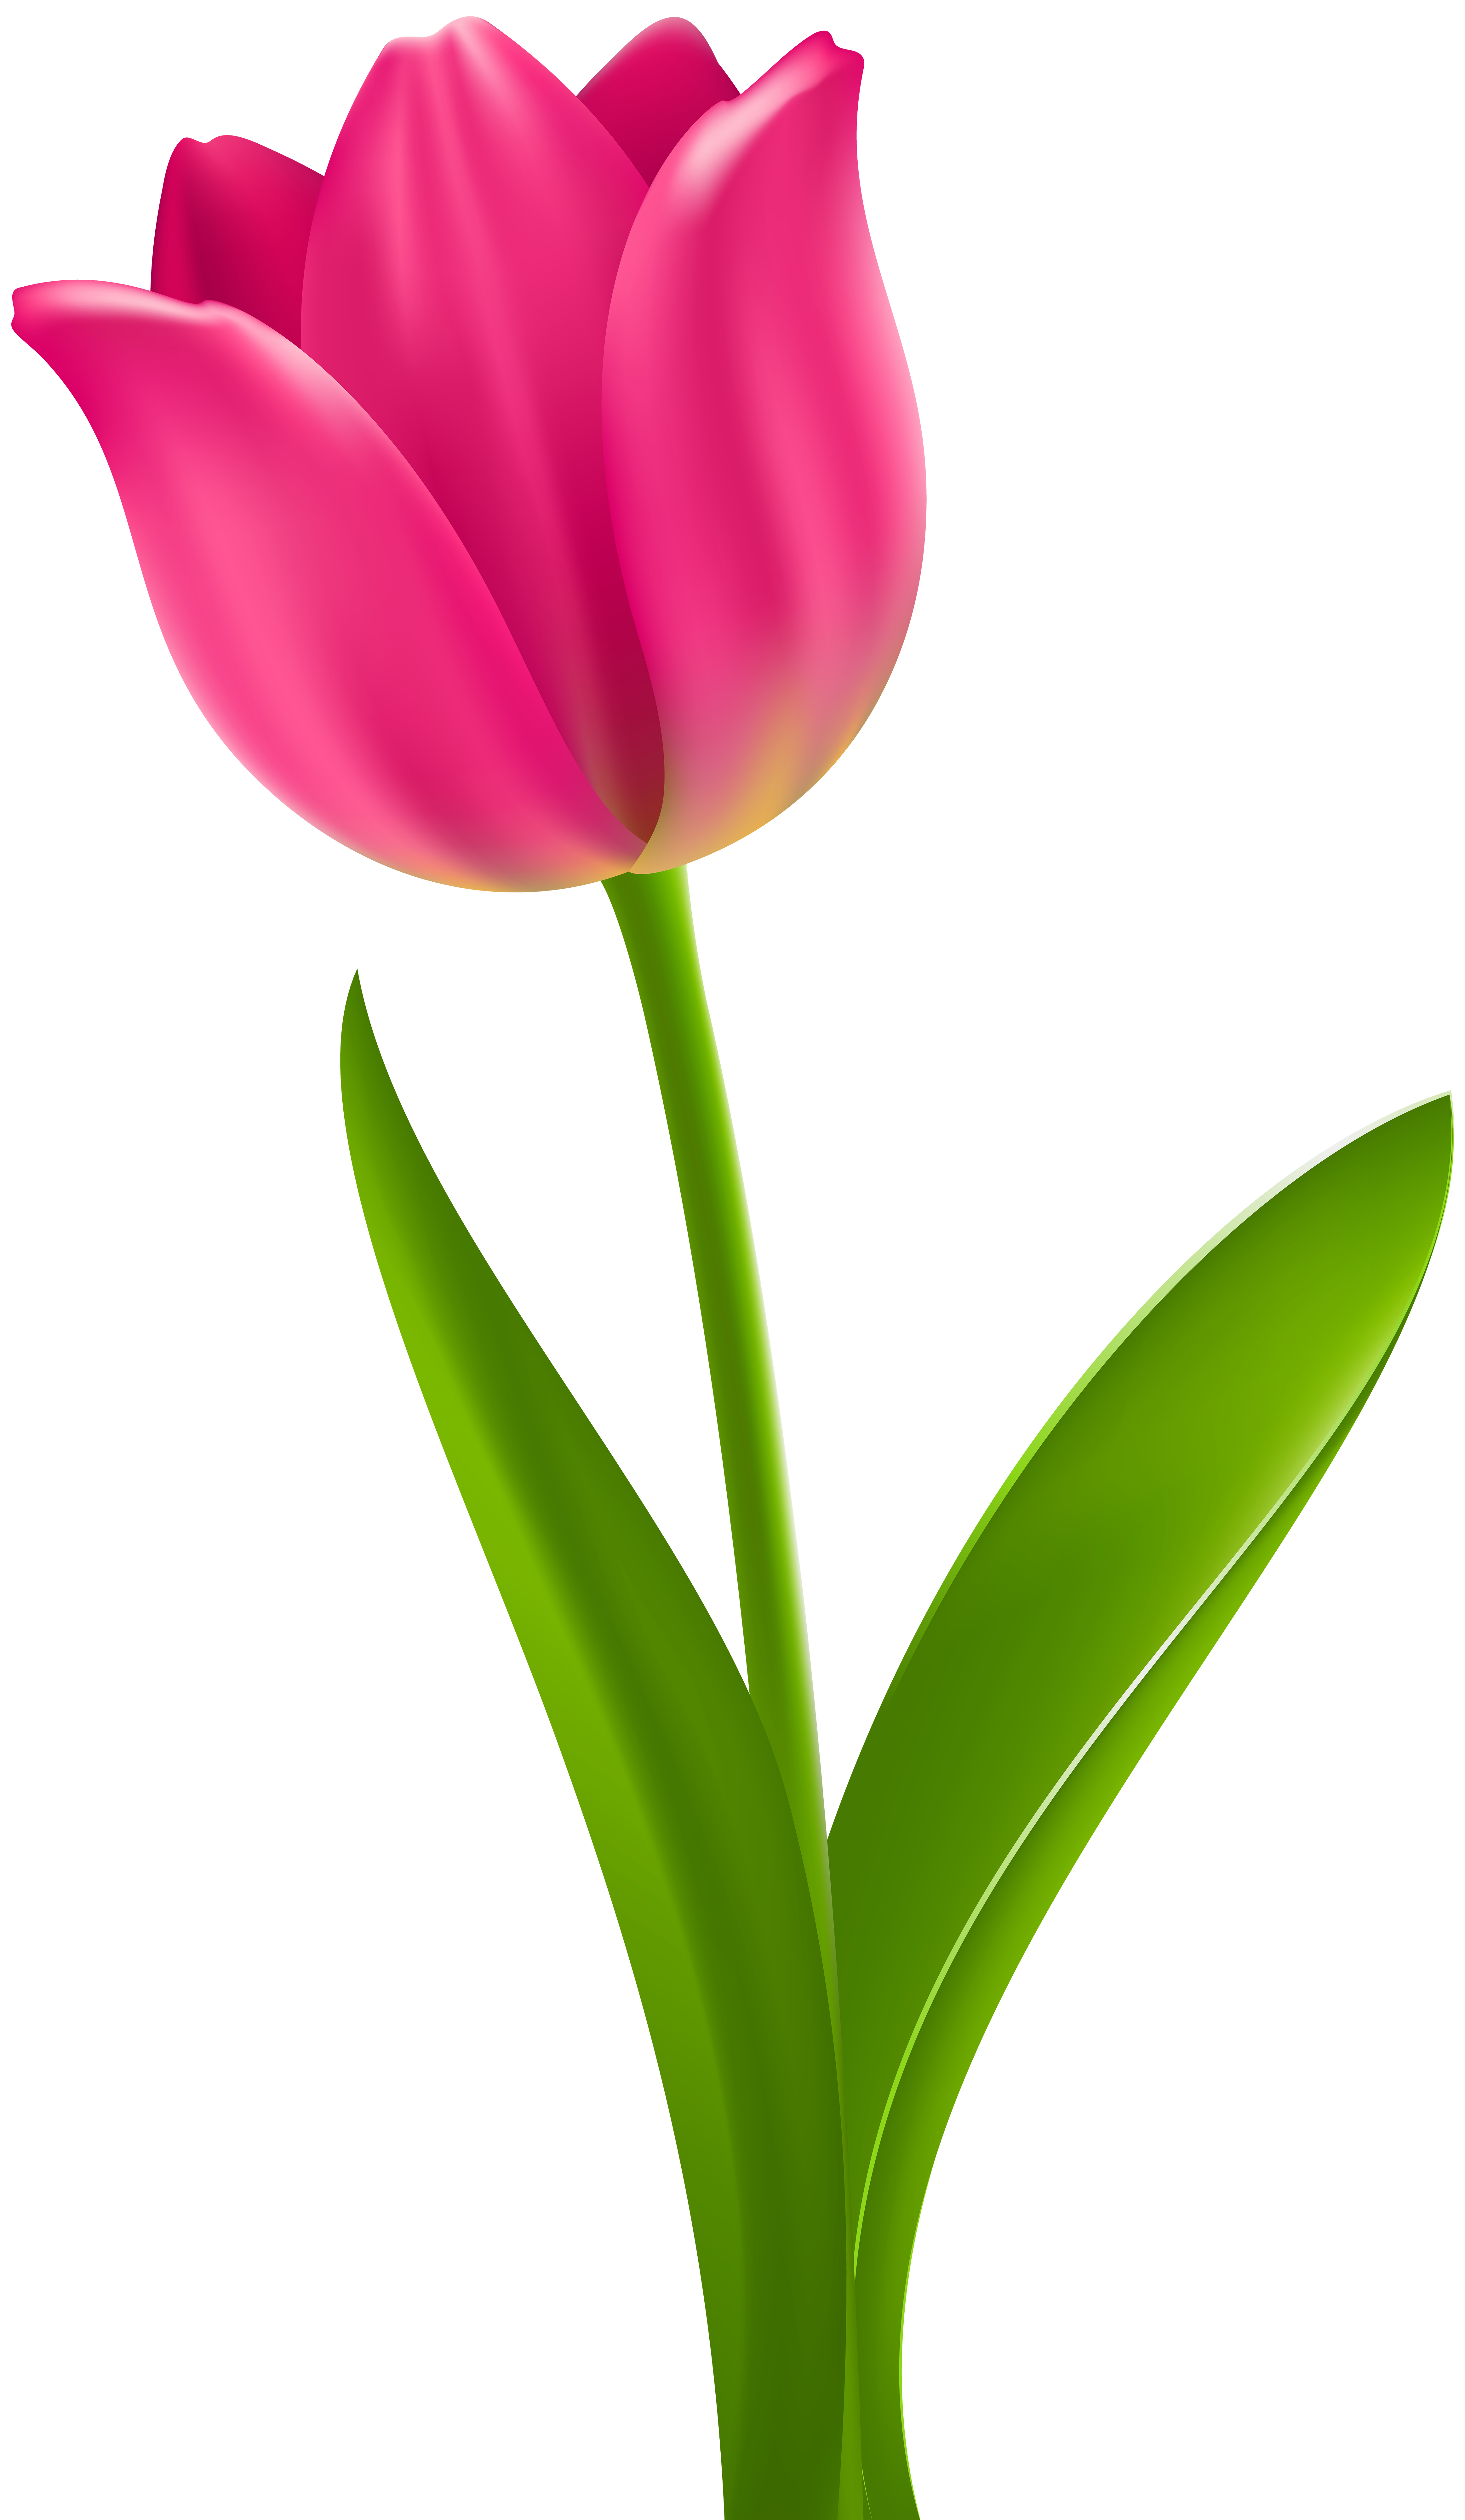 Pink tulip photo